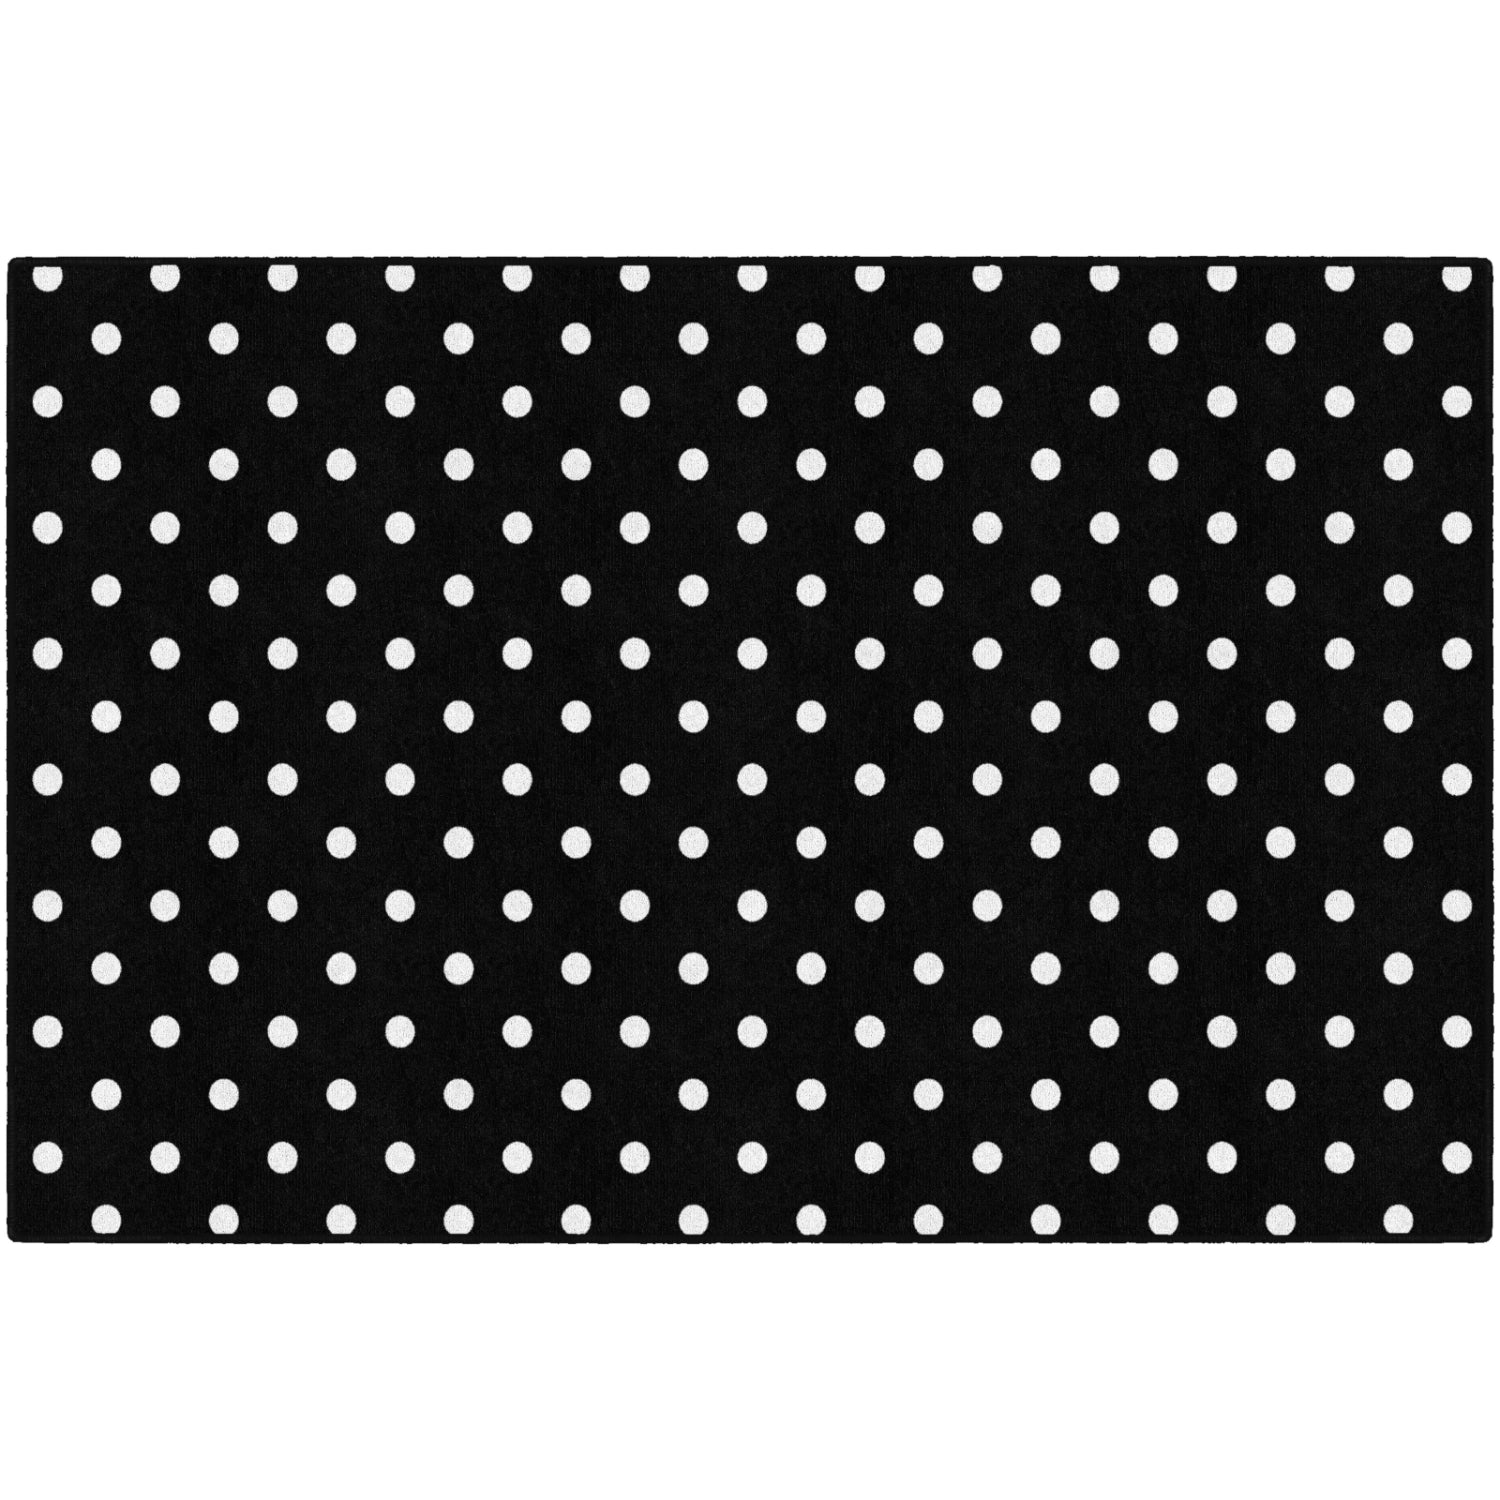 Schoolgirl Style Black, White & Stylish Brights Small Black & White Polka Dots Rugs